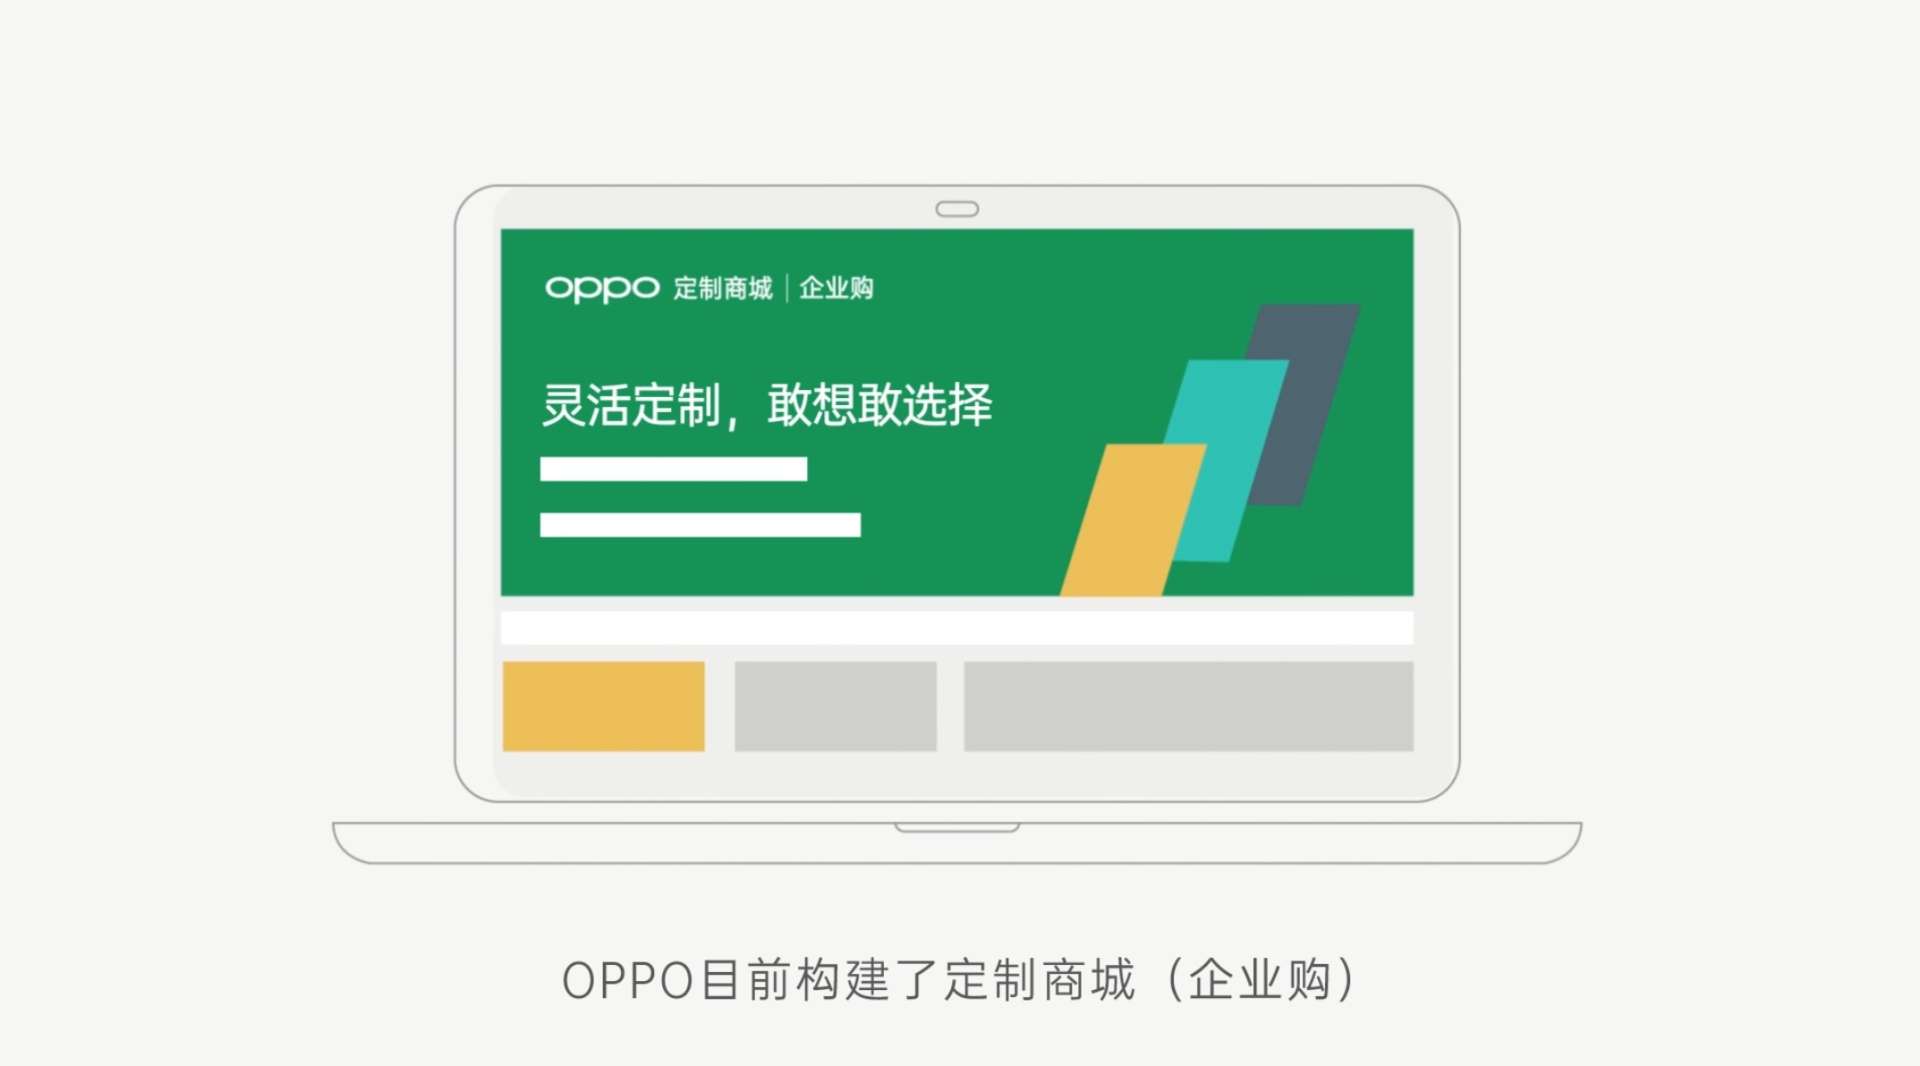 OPPO企业定制商城宣传动画